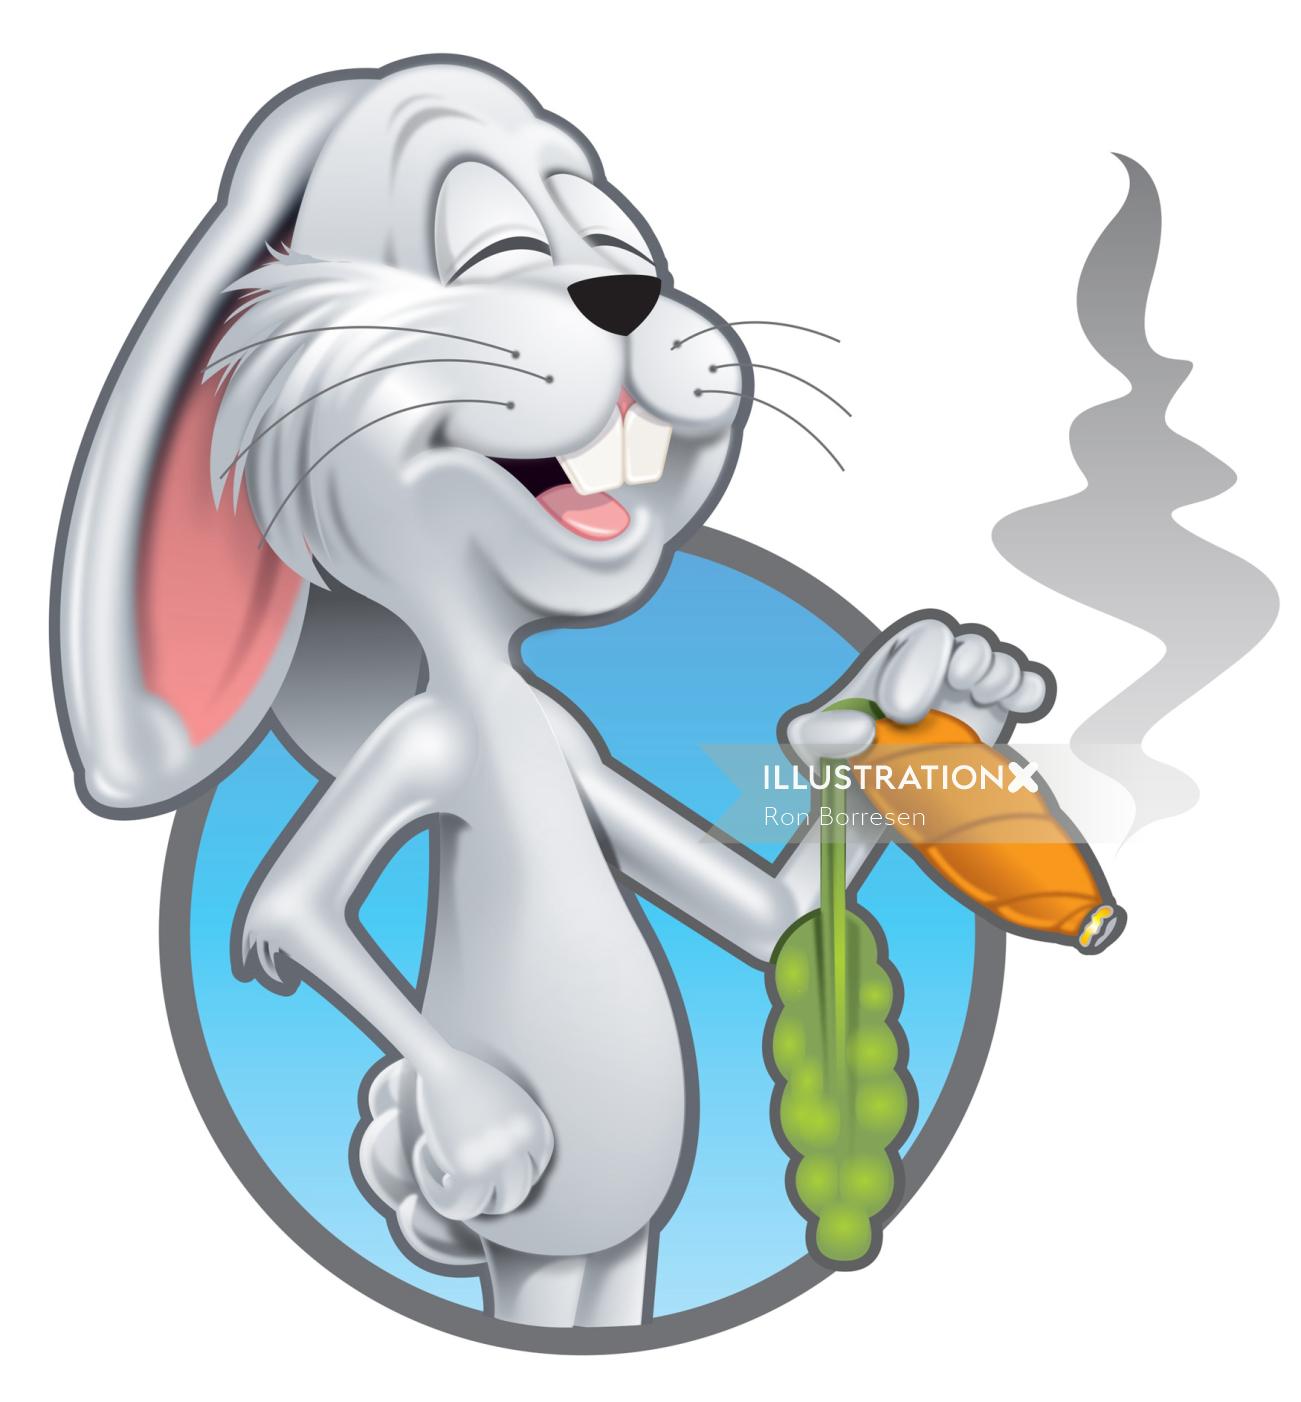 Character design of happy bunny
